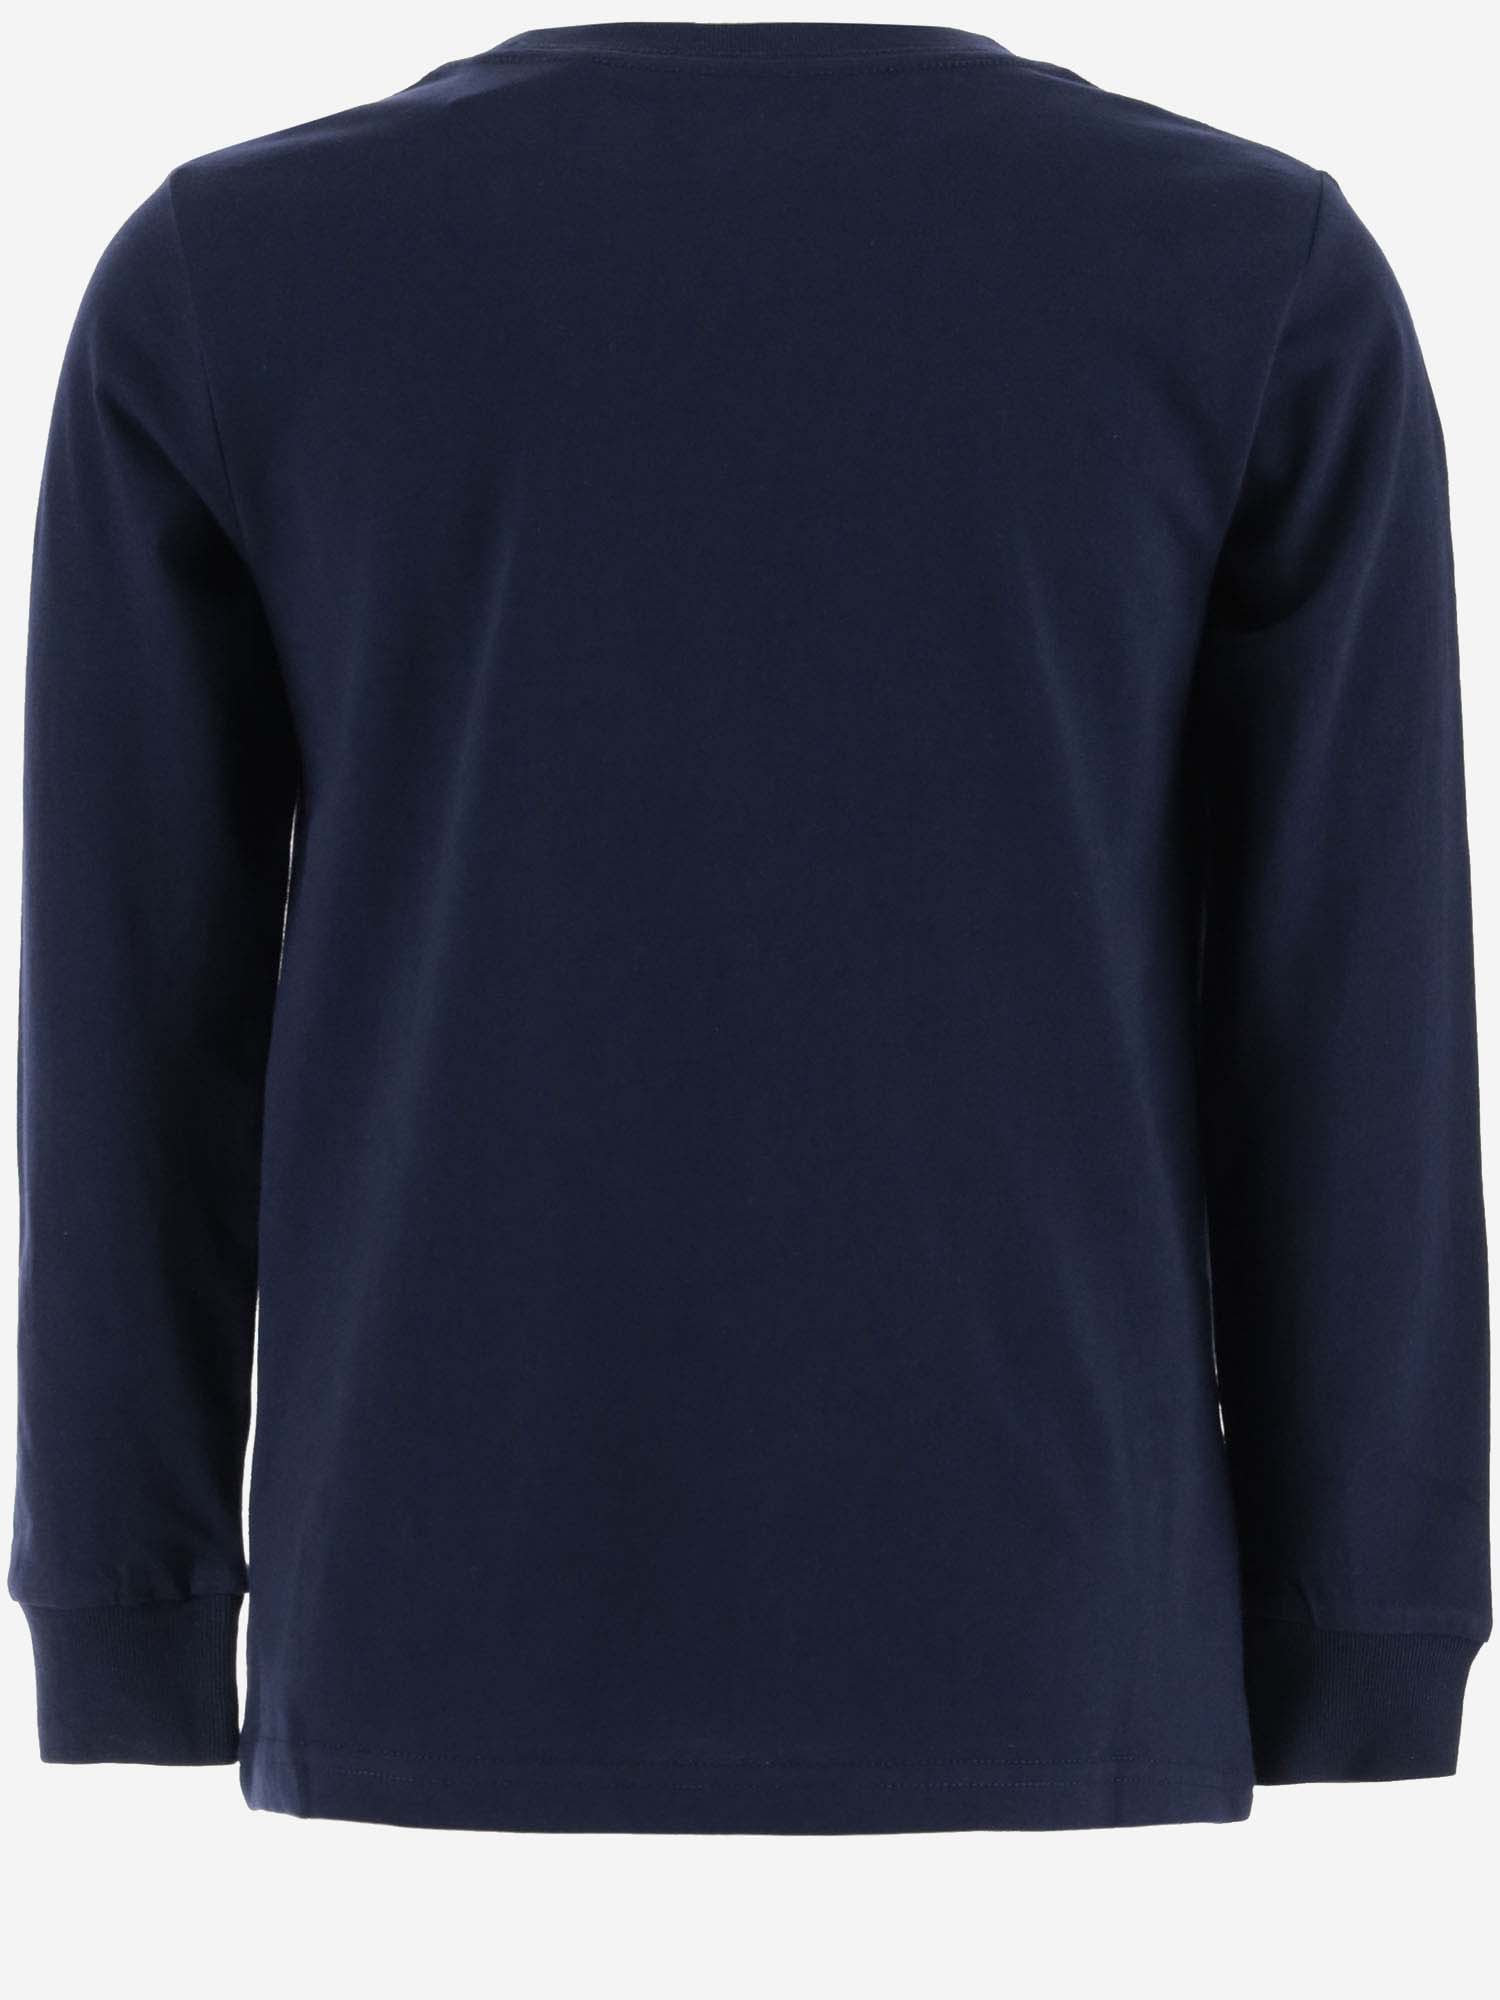 Shop Ralph Lauren Cotton Polo Bear Sweatshirt